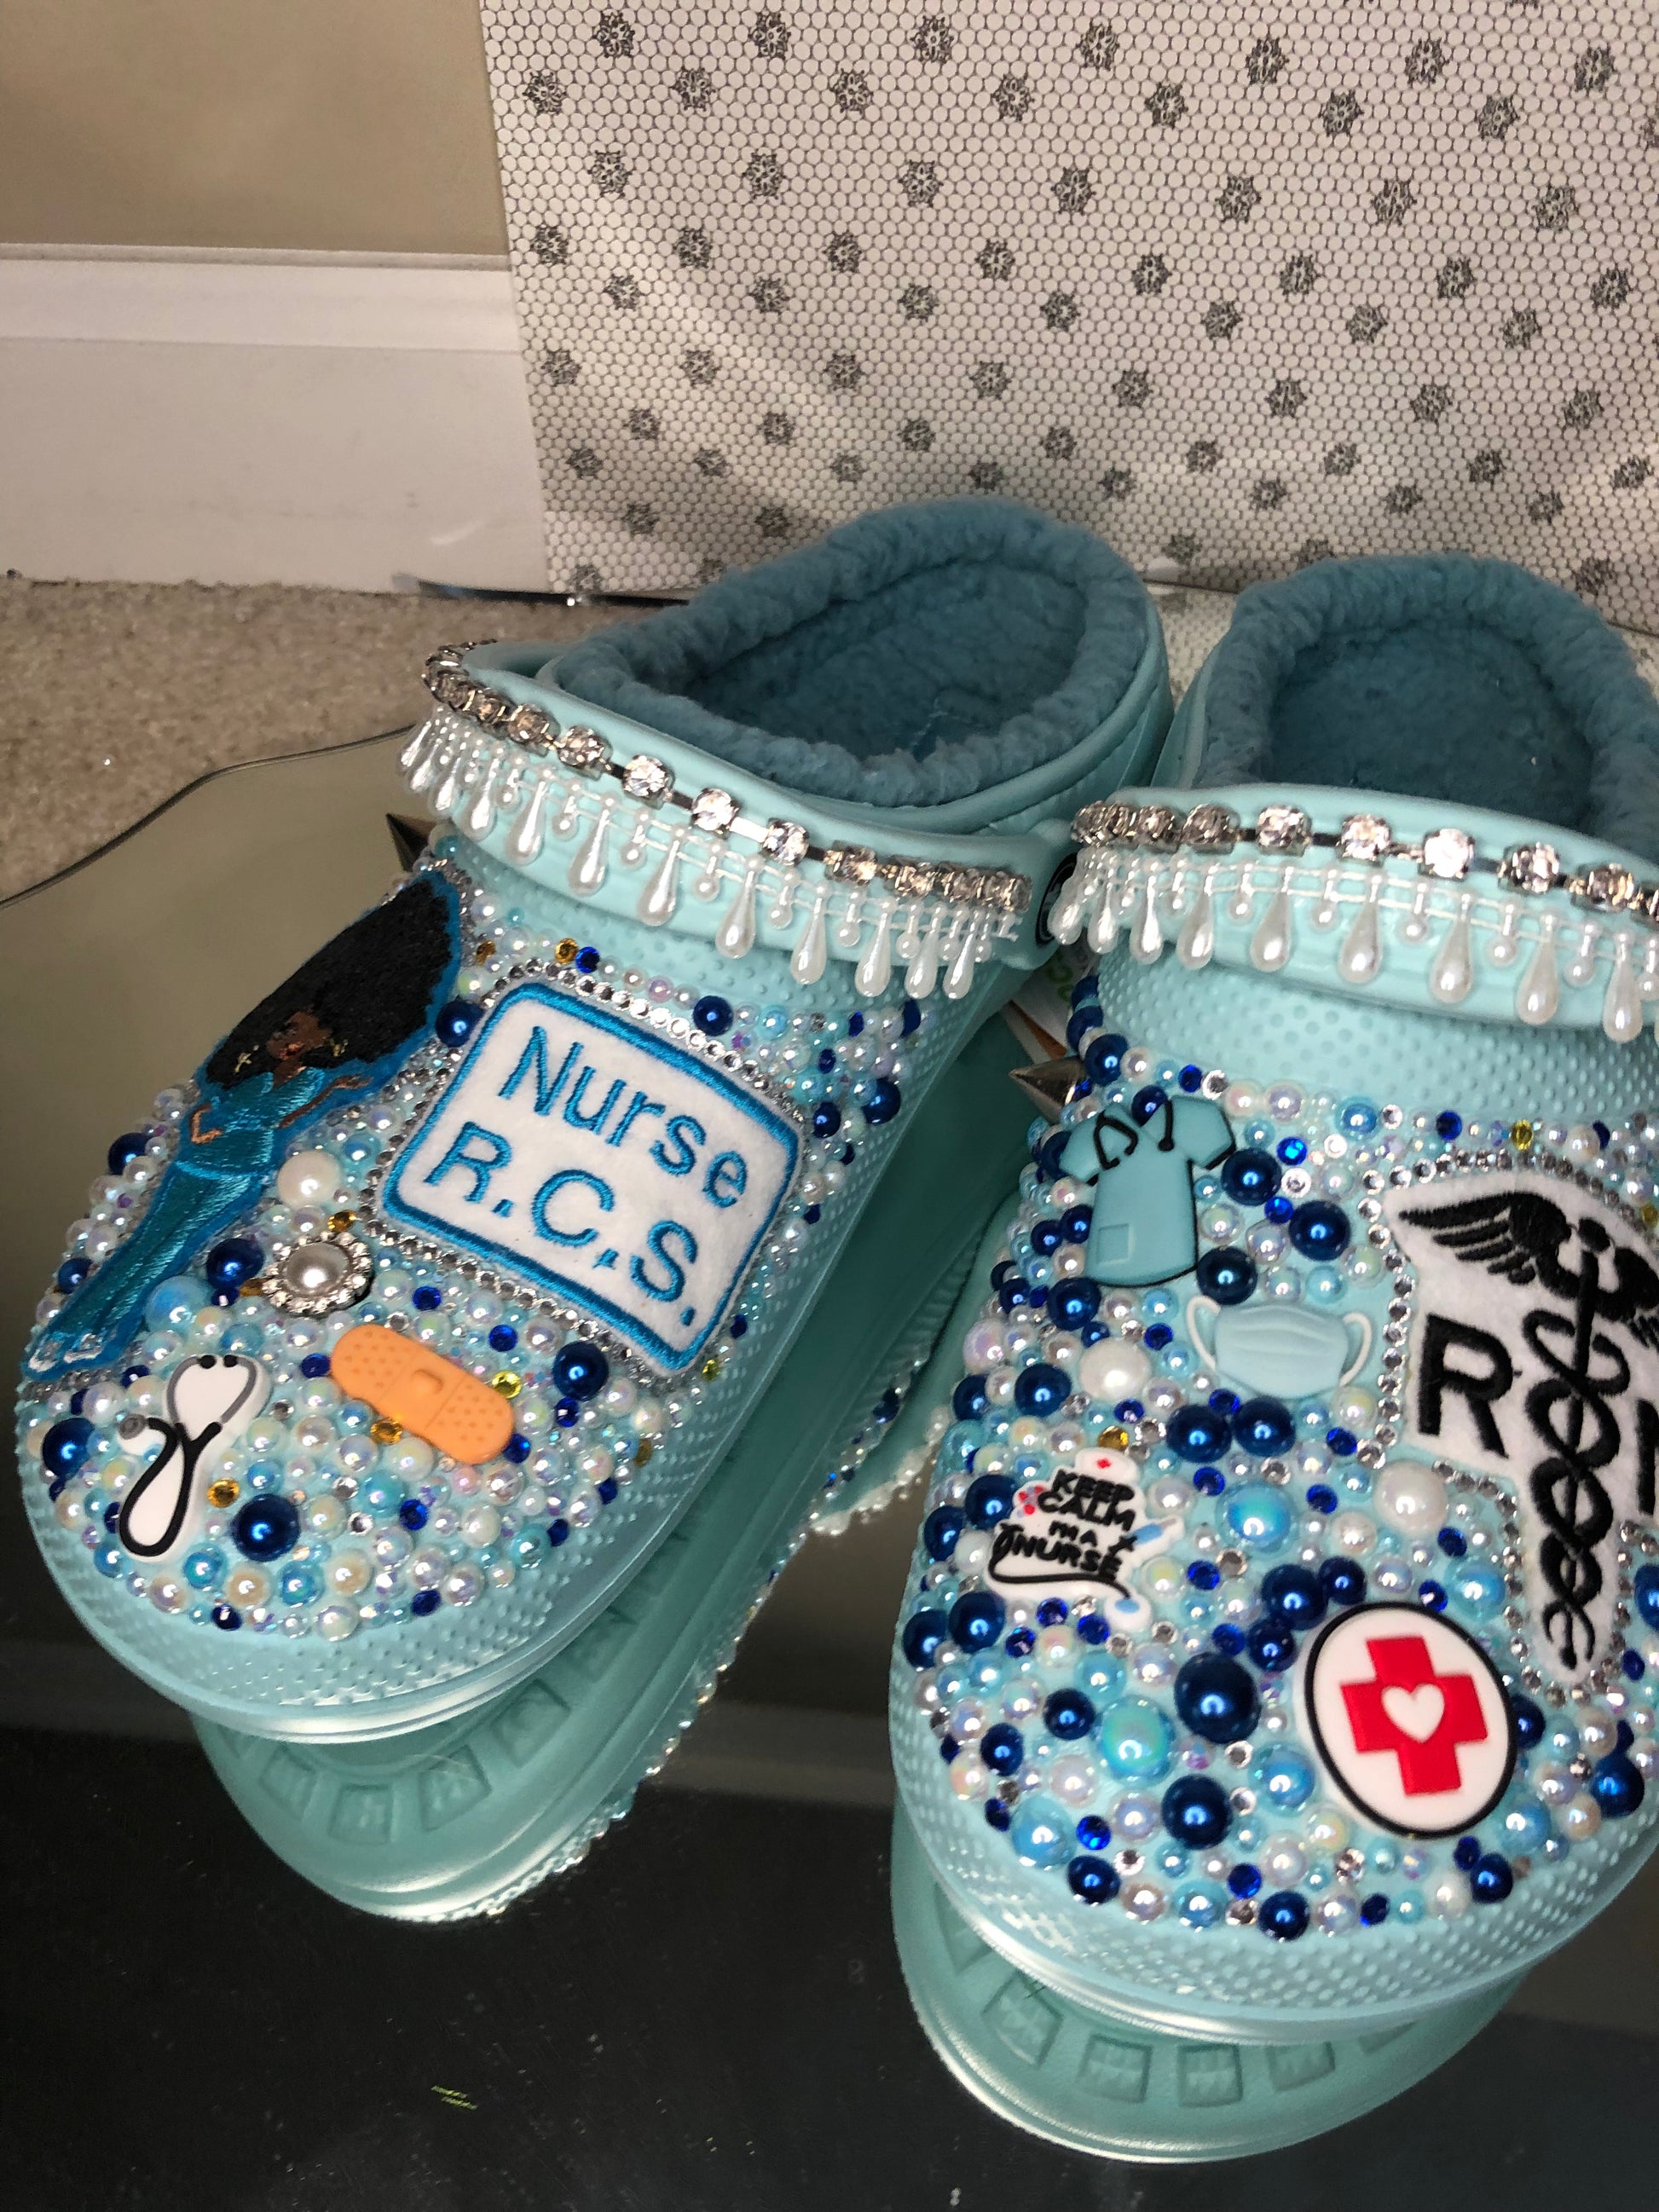 Nurse Crocs